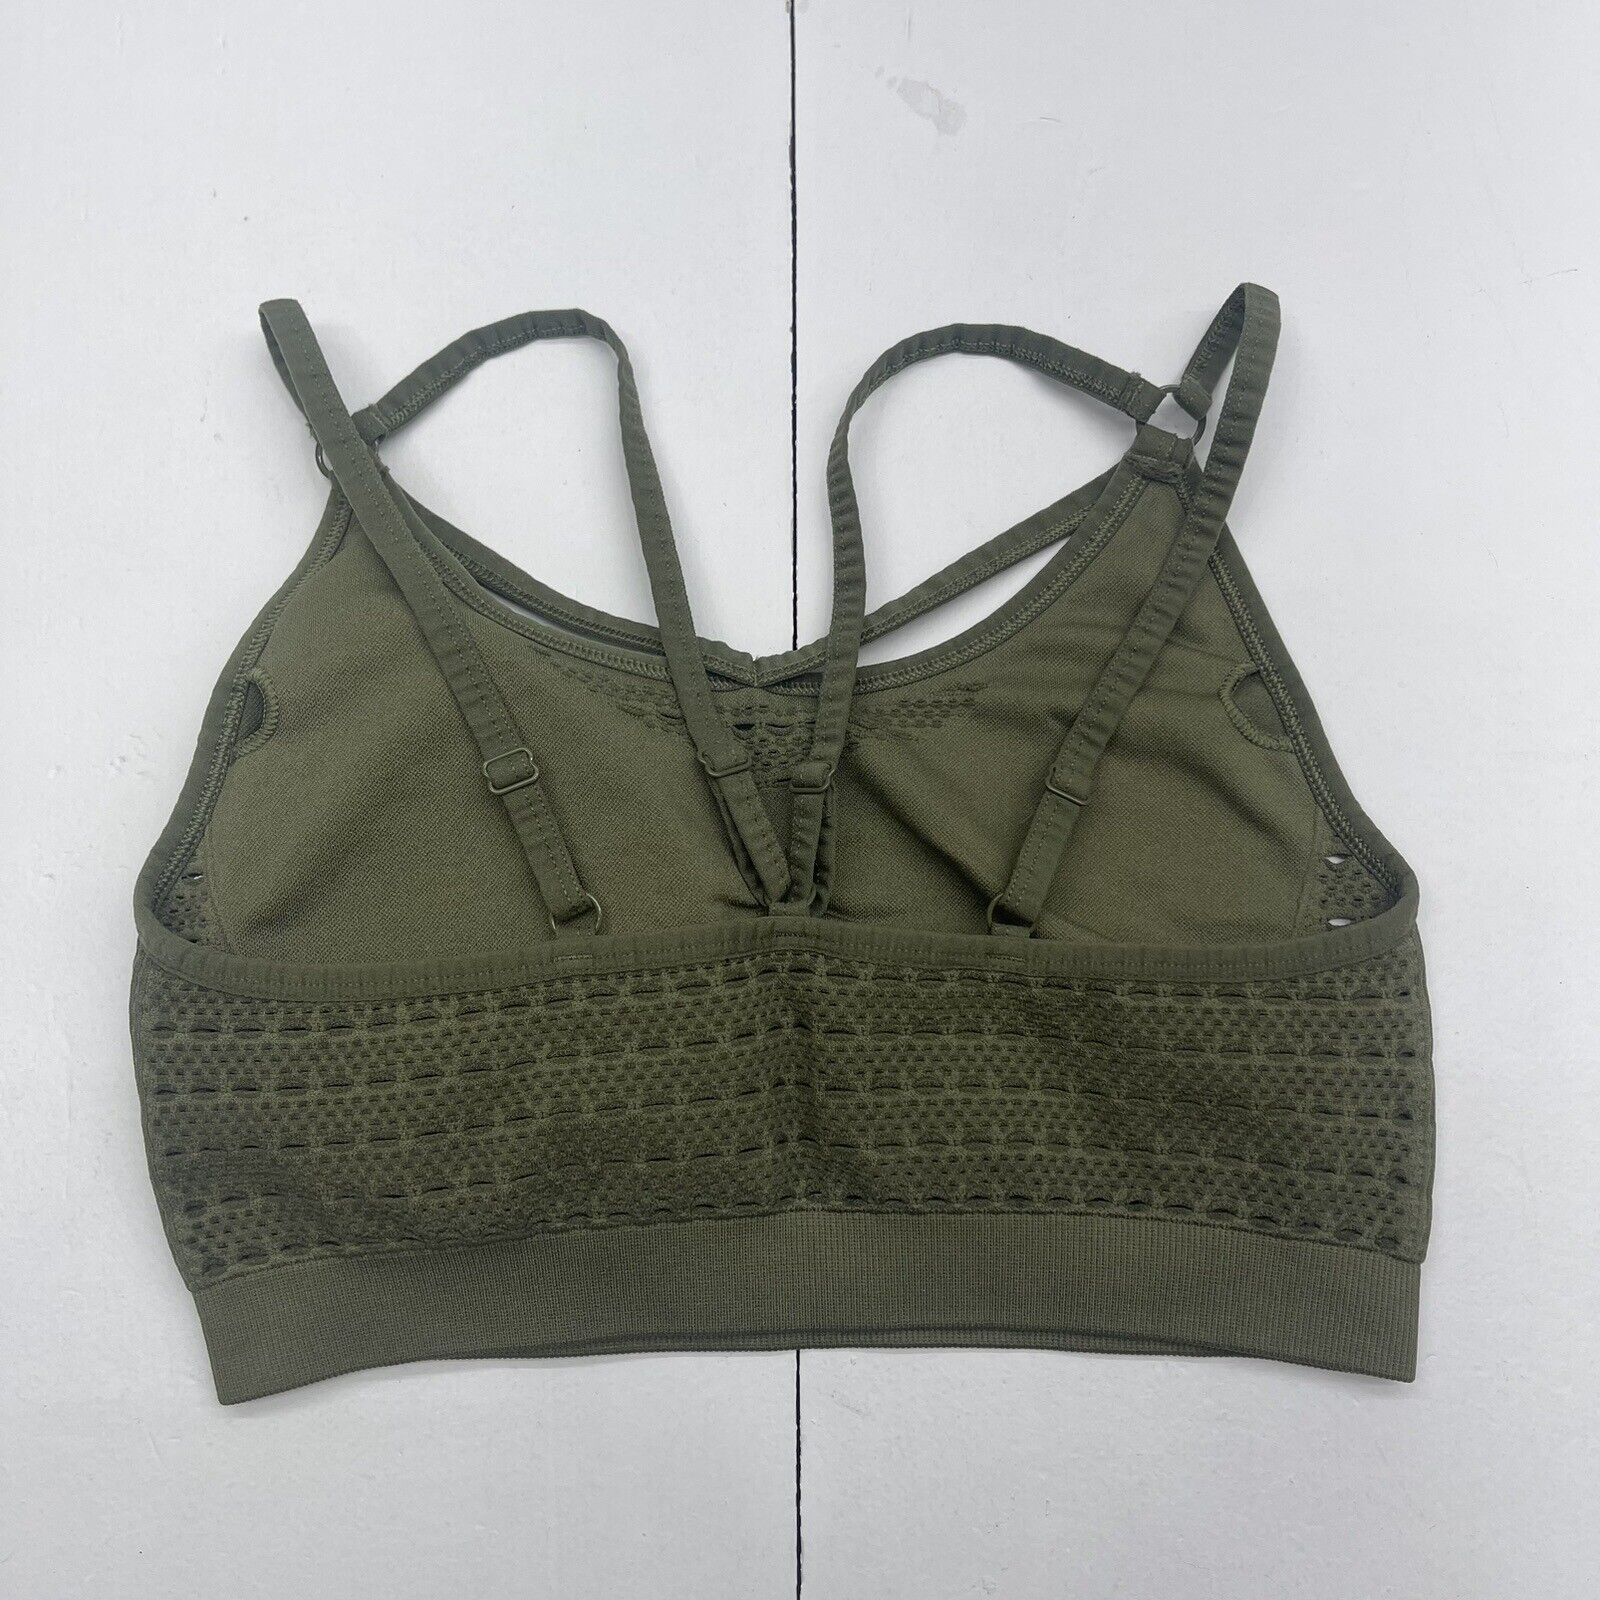 Army green sports bra size large